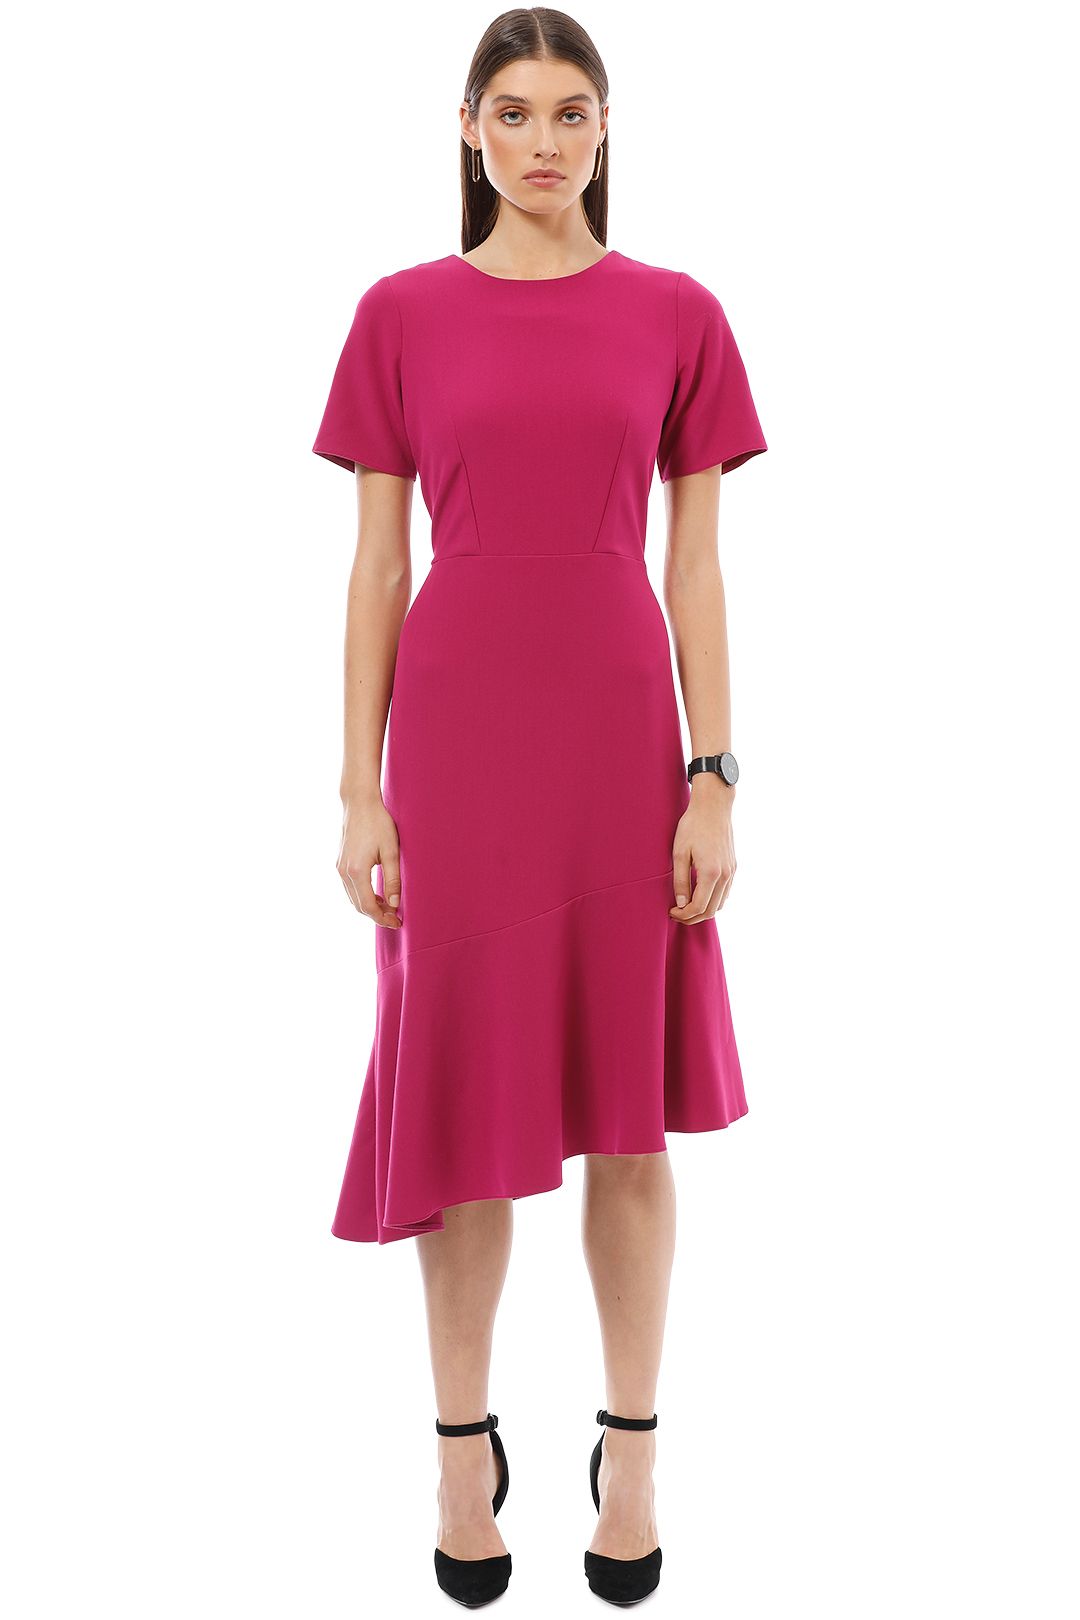 Closet London - Asymmetric Frill Dress - Pink - Front